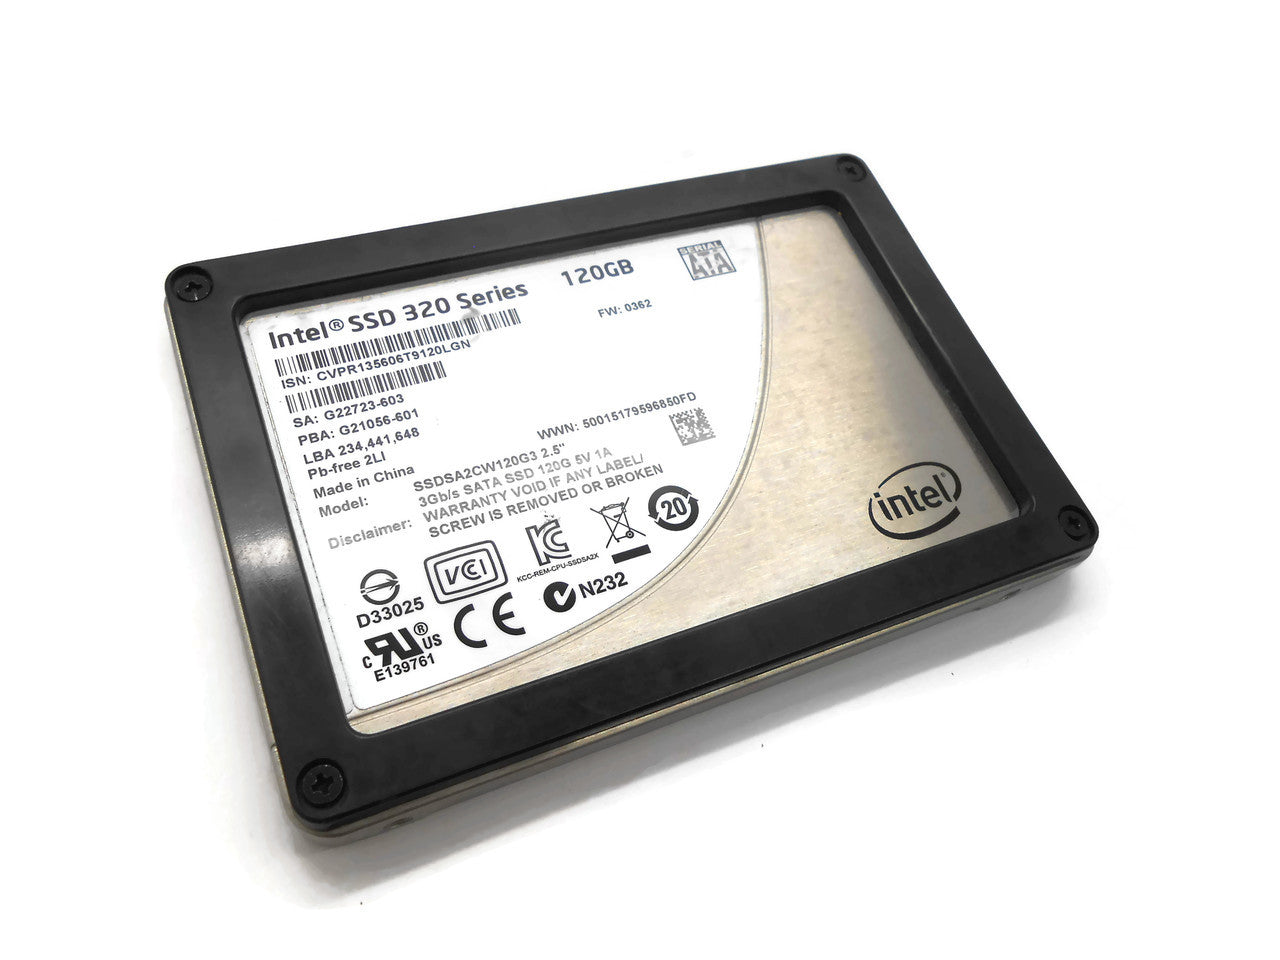 HP Intel 320 Series 120GB Drive G22723-603 G21056-601 notebookparts.com